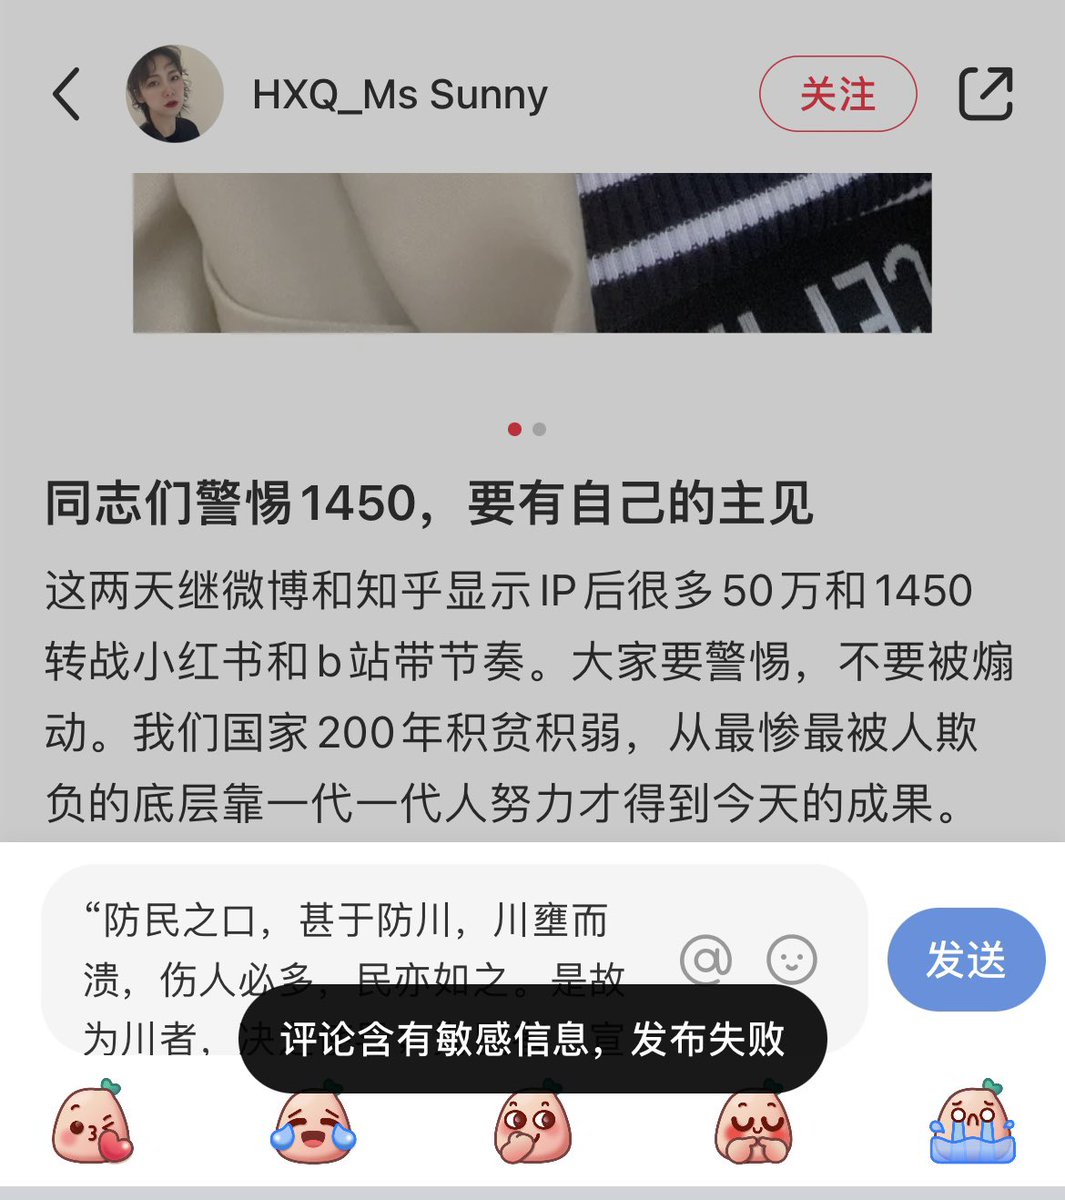 圖https://pbs.twimg.com/media/FQf7wxDXMAQZ6gL.jpg, 中國人也怕1450 o_O????